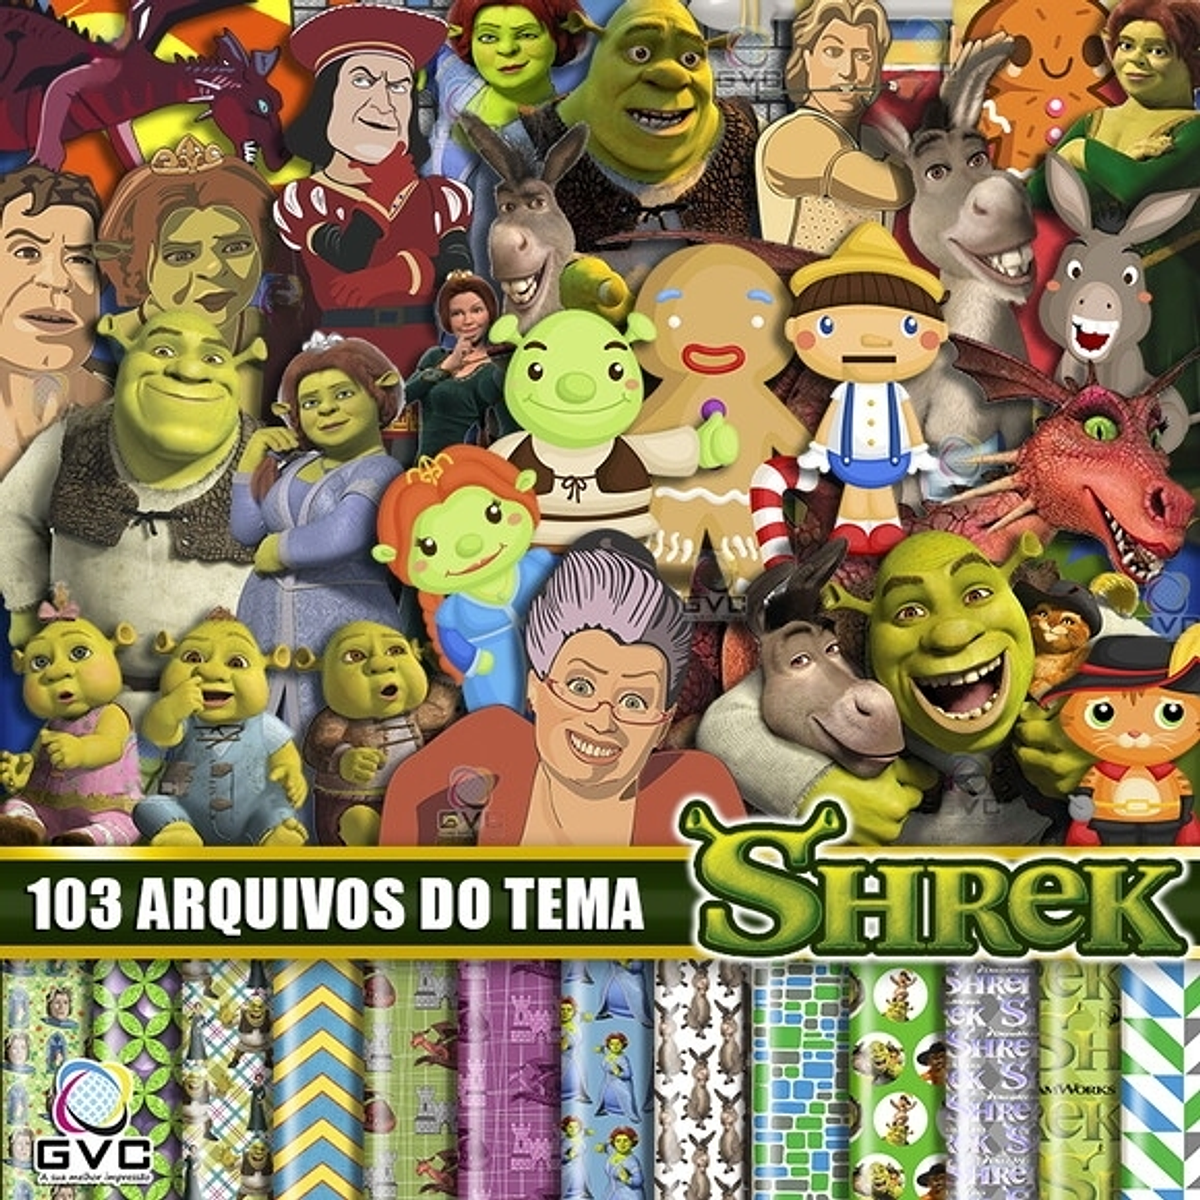 Imágenes Shrek Png, Images Shrek Png Clipart 300 dpi